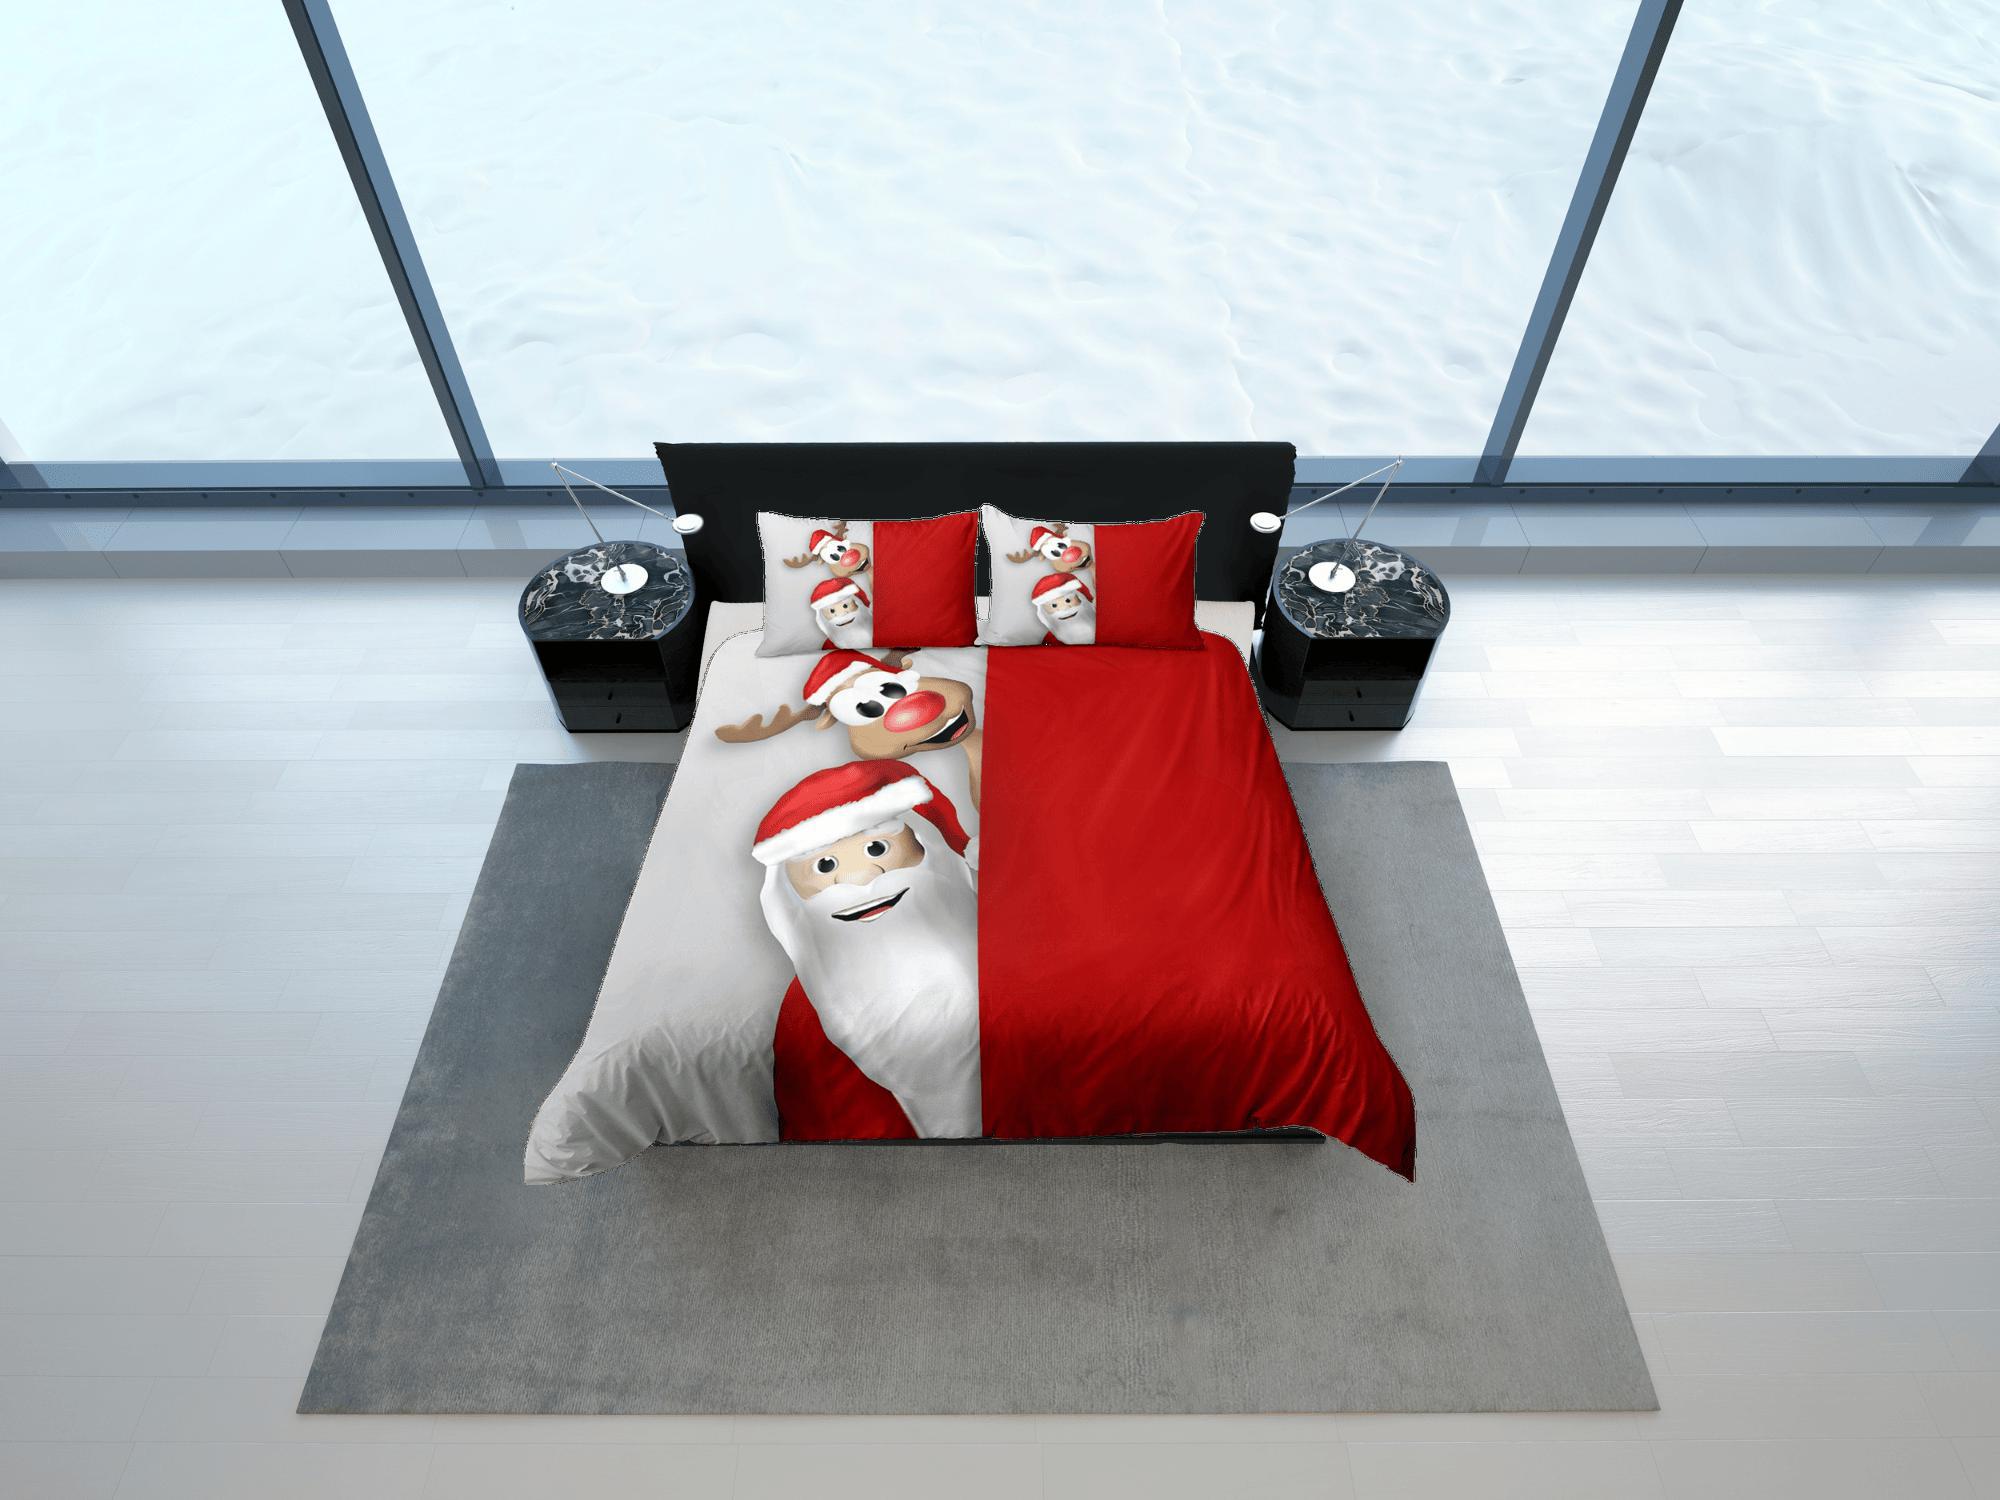 daintyduvet Christmas Duvet Cover Set with Pillows Santa Claus Dorm Bedding Comforter Cover Christmas Gift